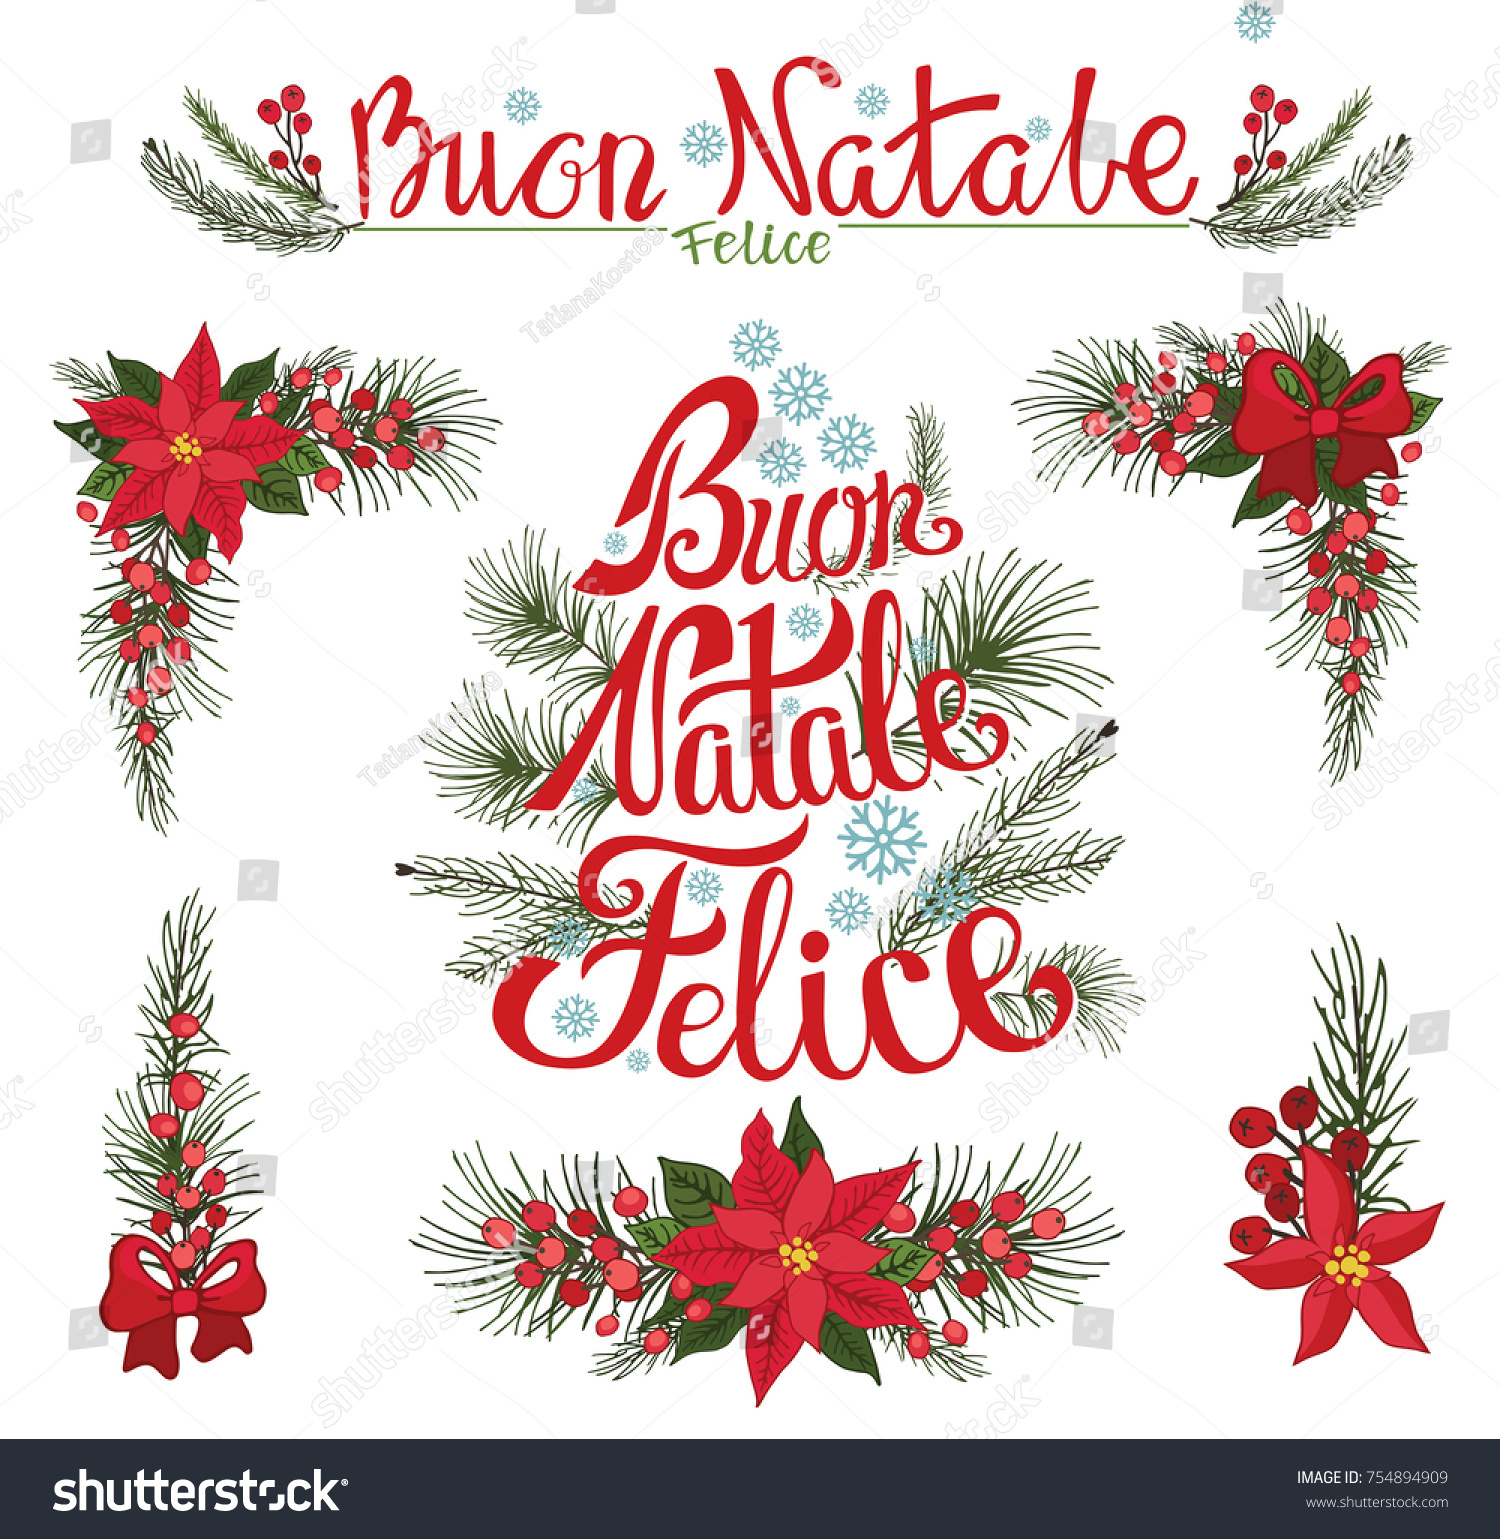 Buon Natale Photos.Christmas Buon Natale Italian Lettering New Stock Vector Royalty Free 754894909